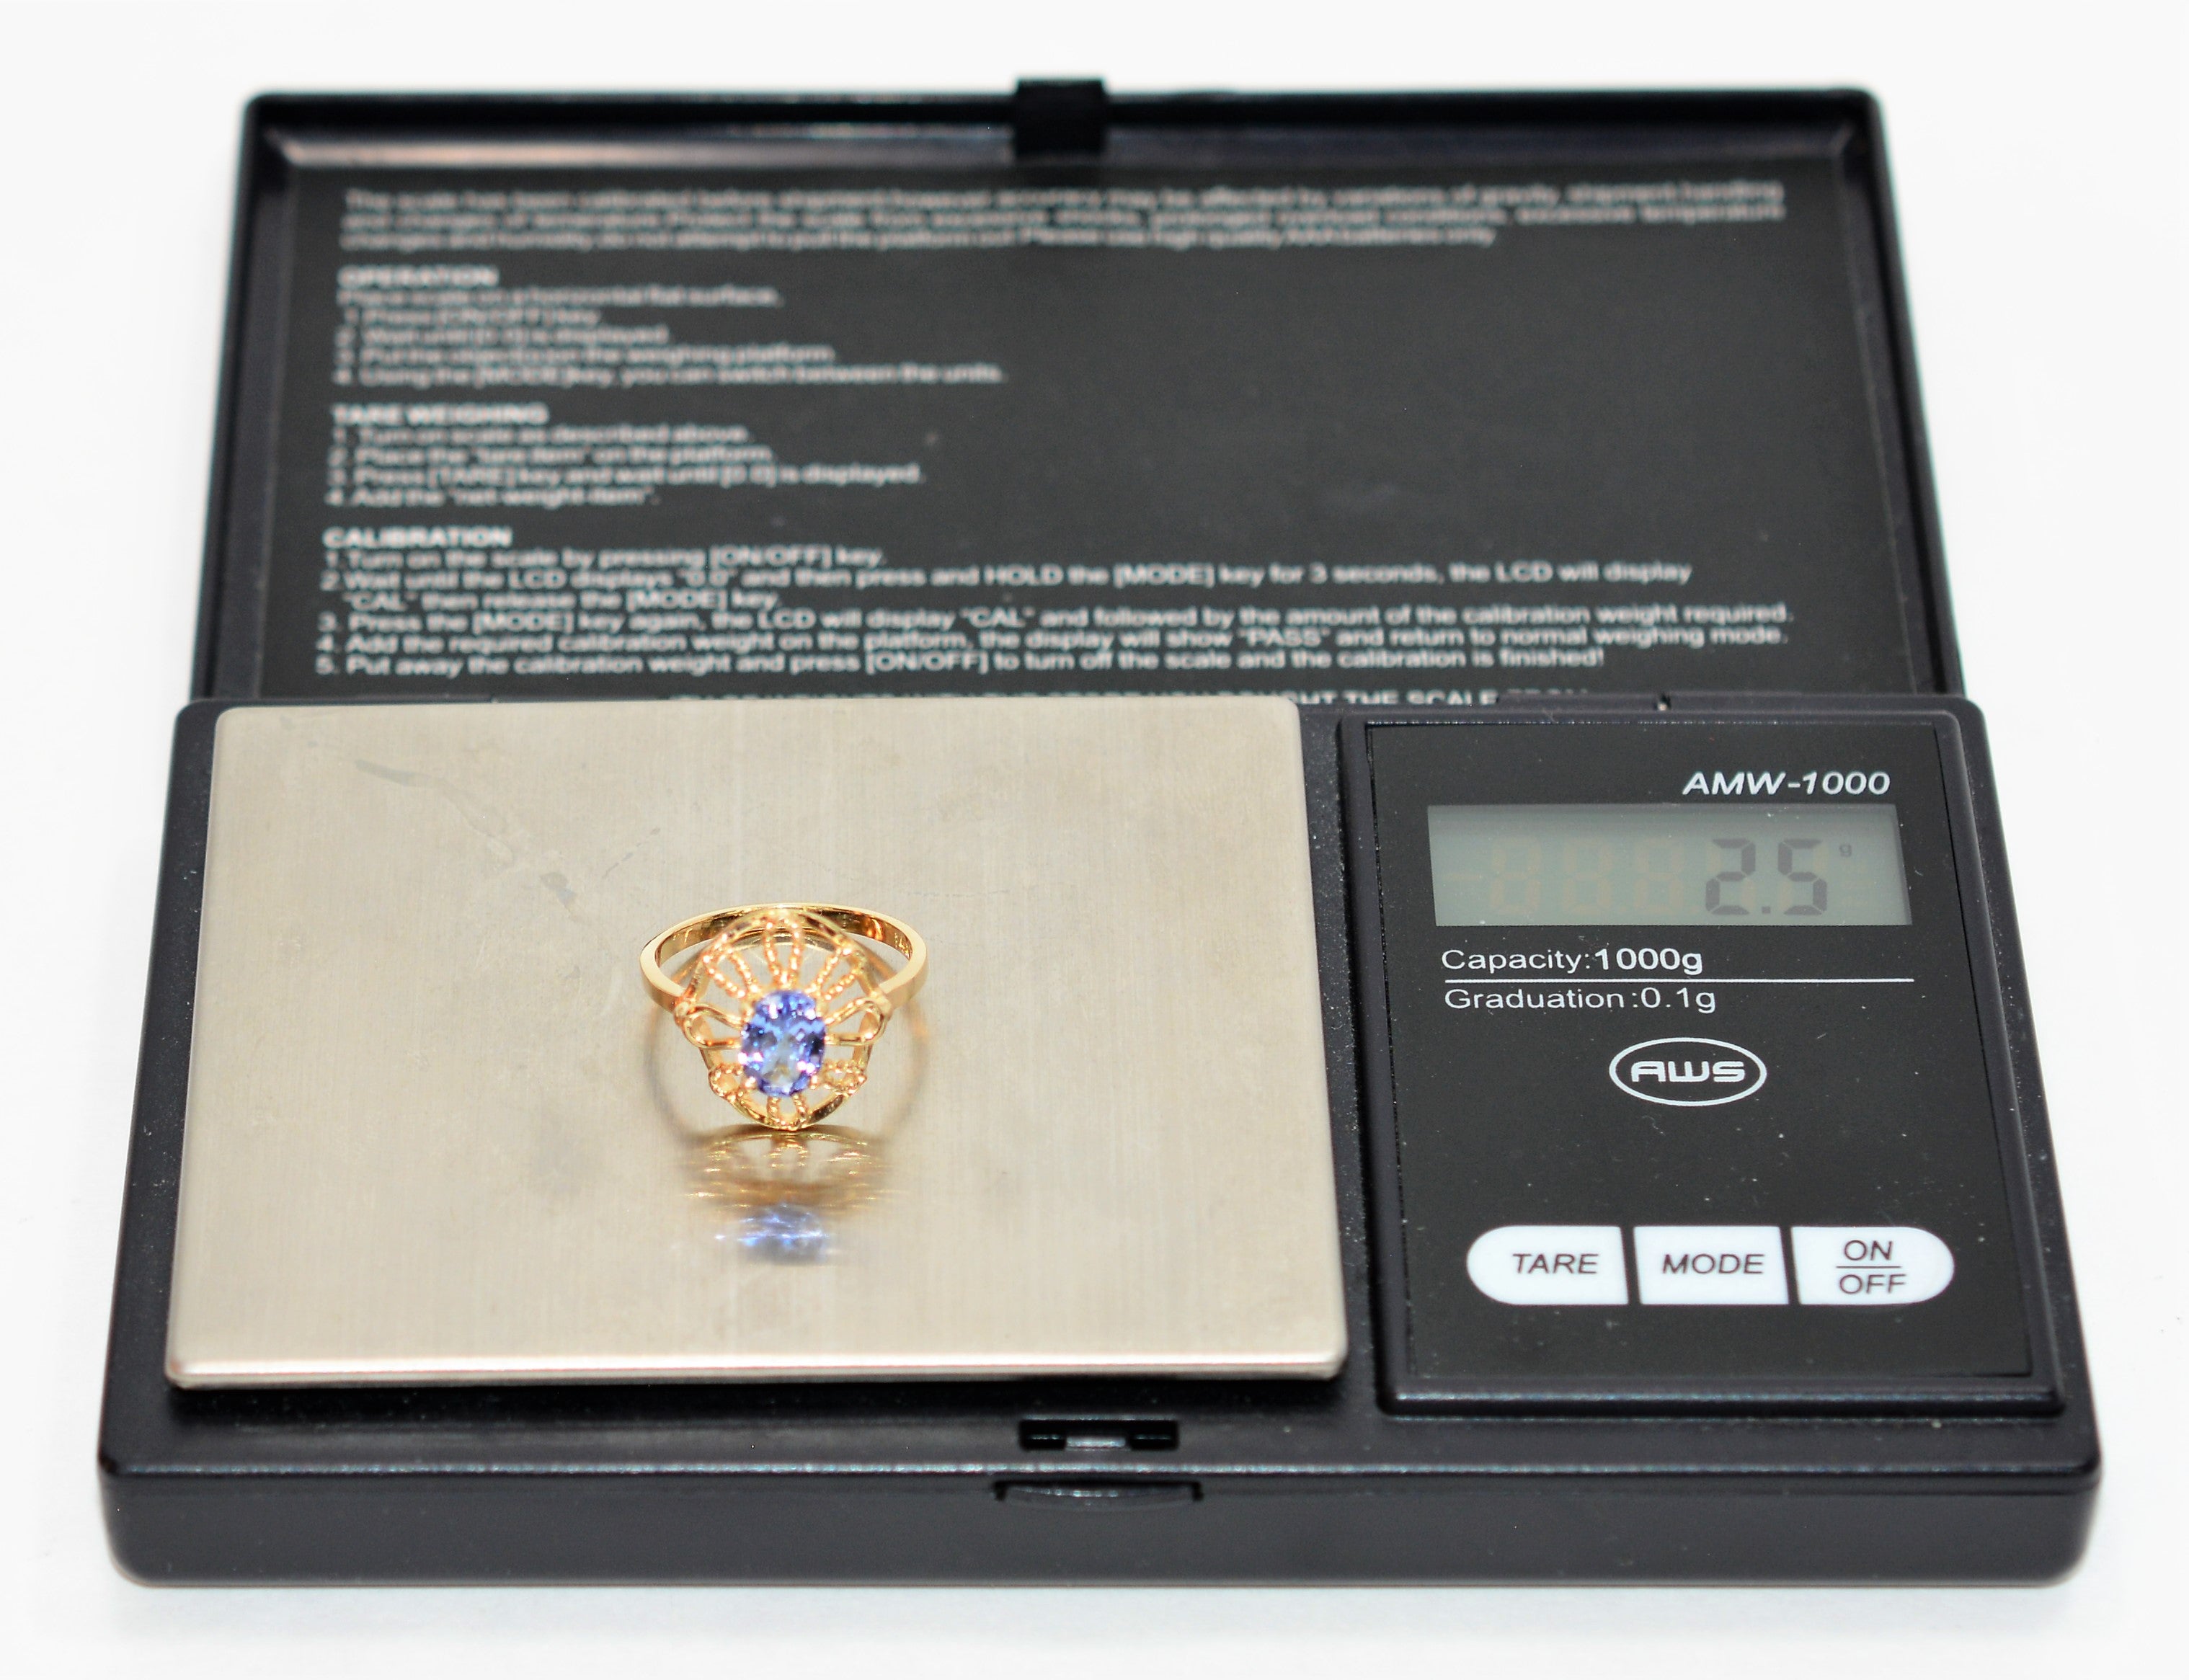 Natural Tanzanite Ring 14K Solid Gold .90ct Solitaire Ring Statement Ring Vintage Ring Gemstone Ring Women's Ring December Birthstone Ring